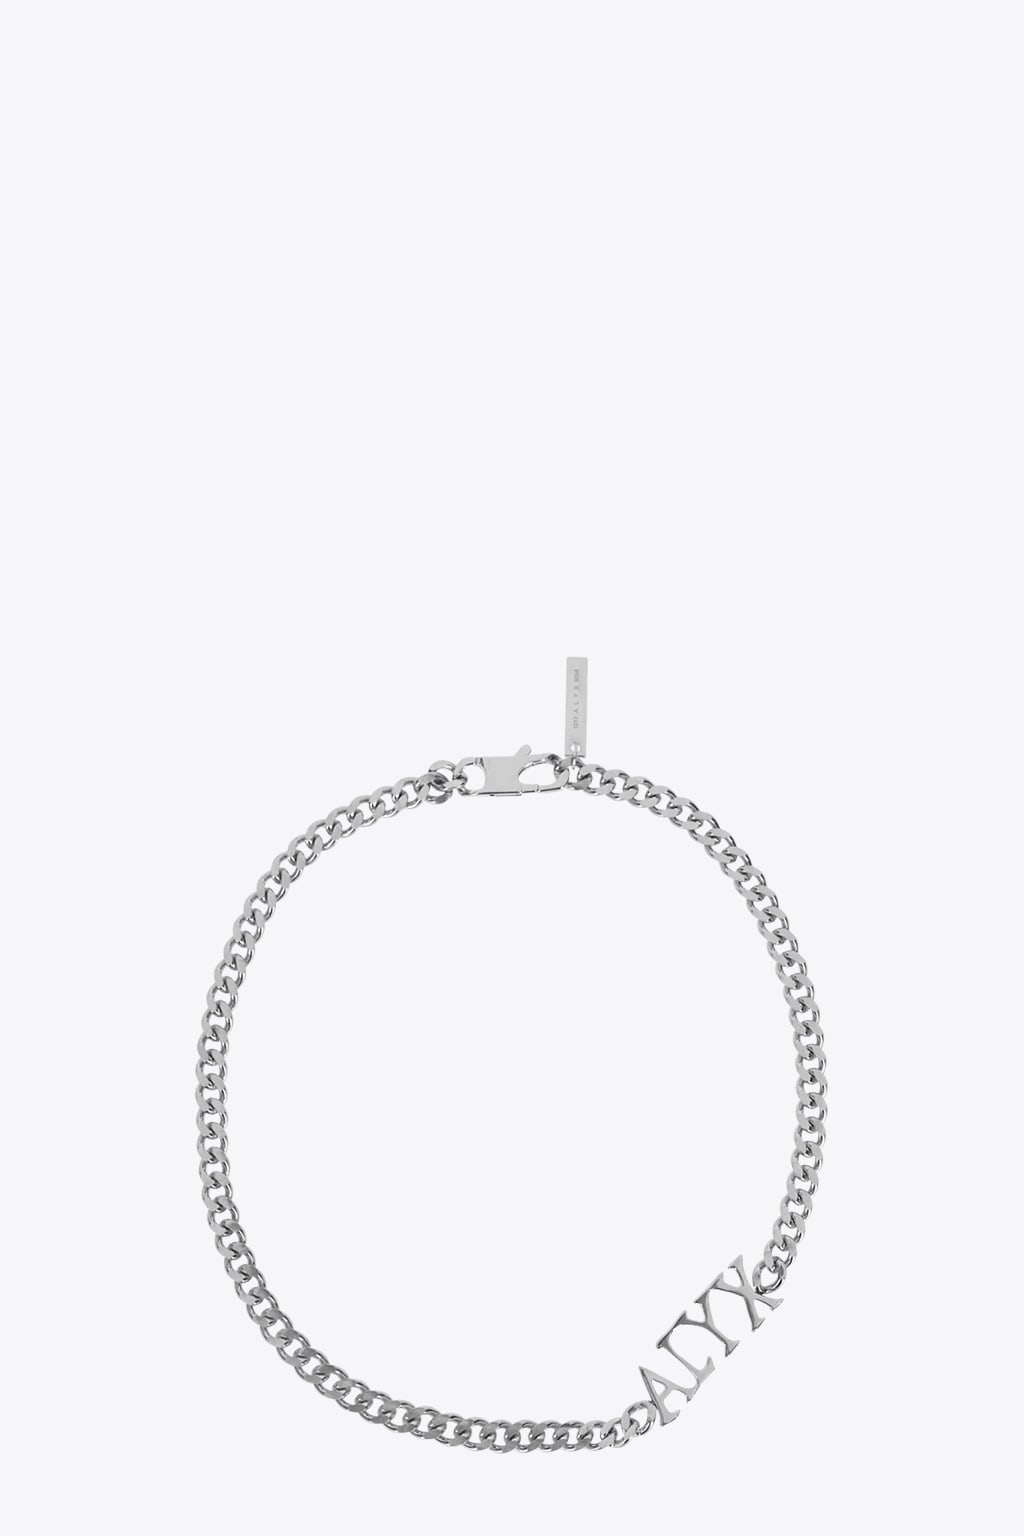 1017 ALYX 9SM Logo Necklace Silver metal necklace with logo - Logo necklace